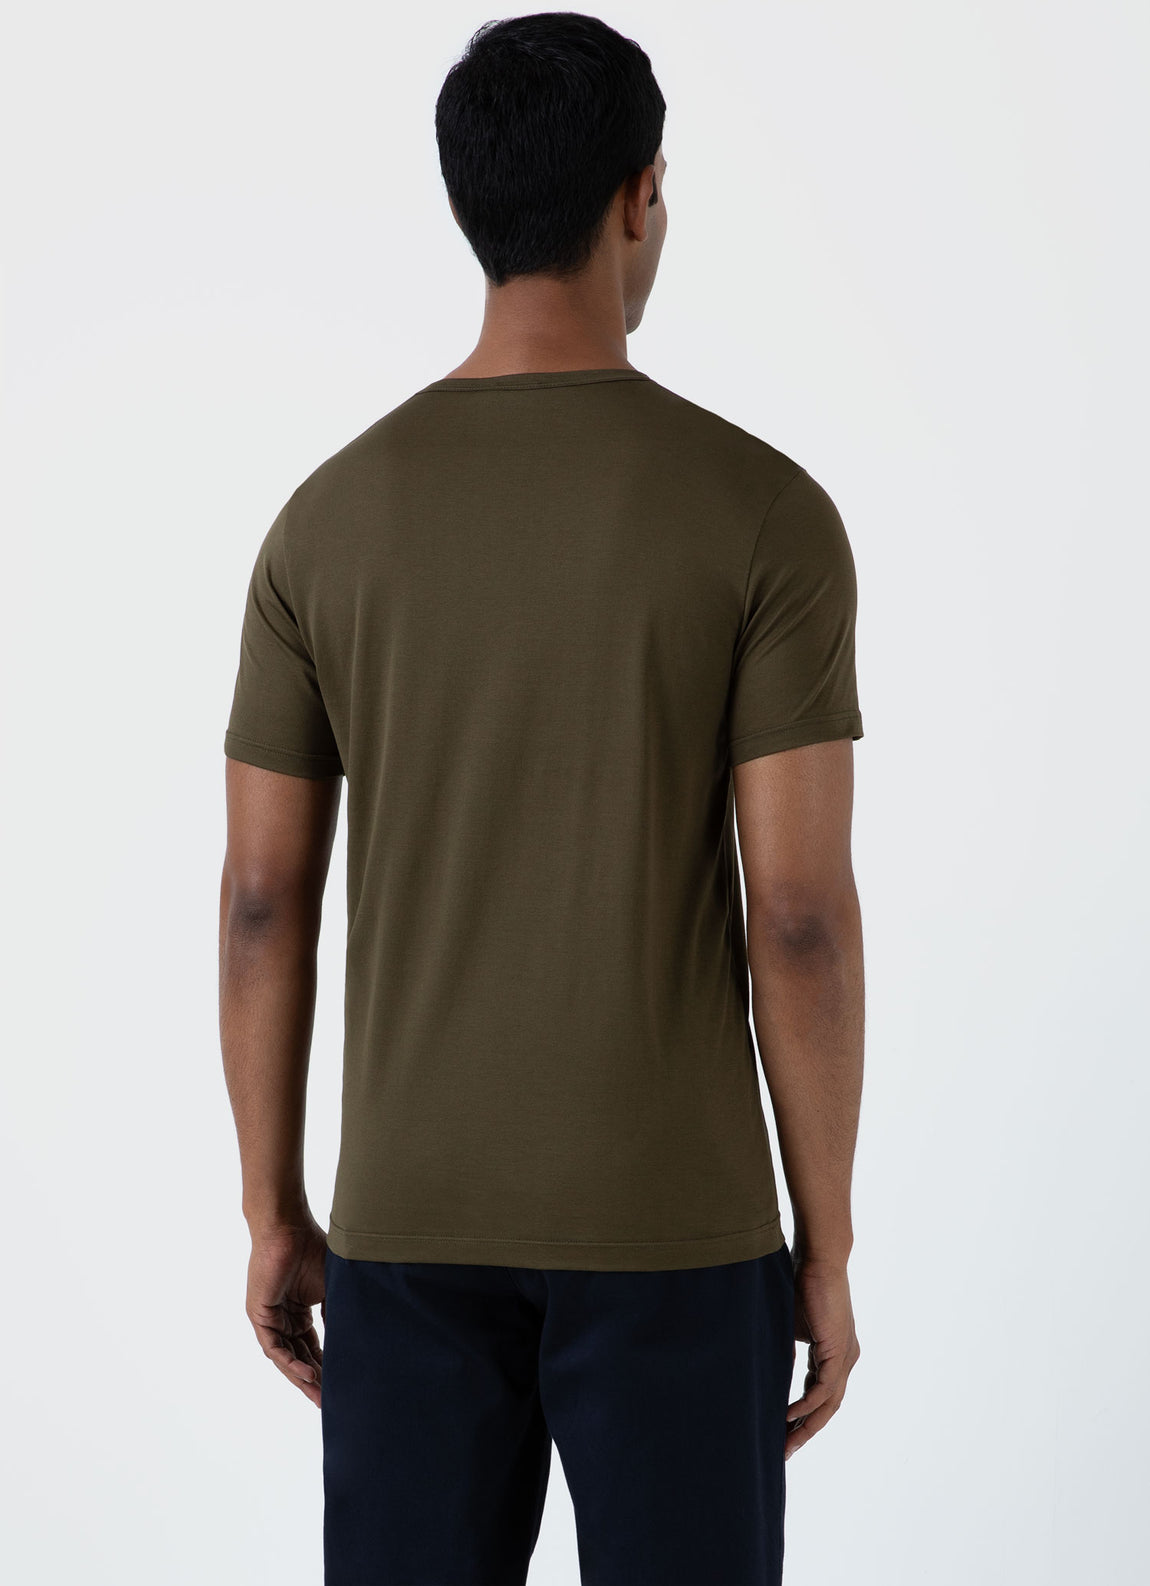 Men's Classic T-shirt in Dark Olive | Sunspel